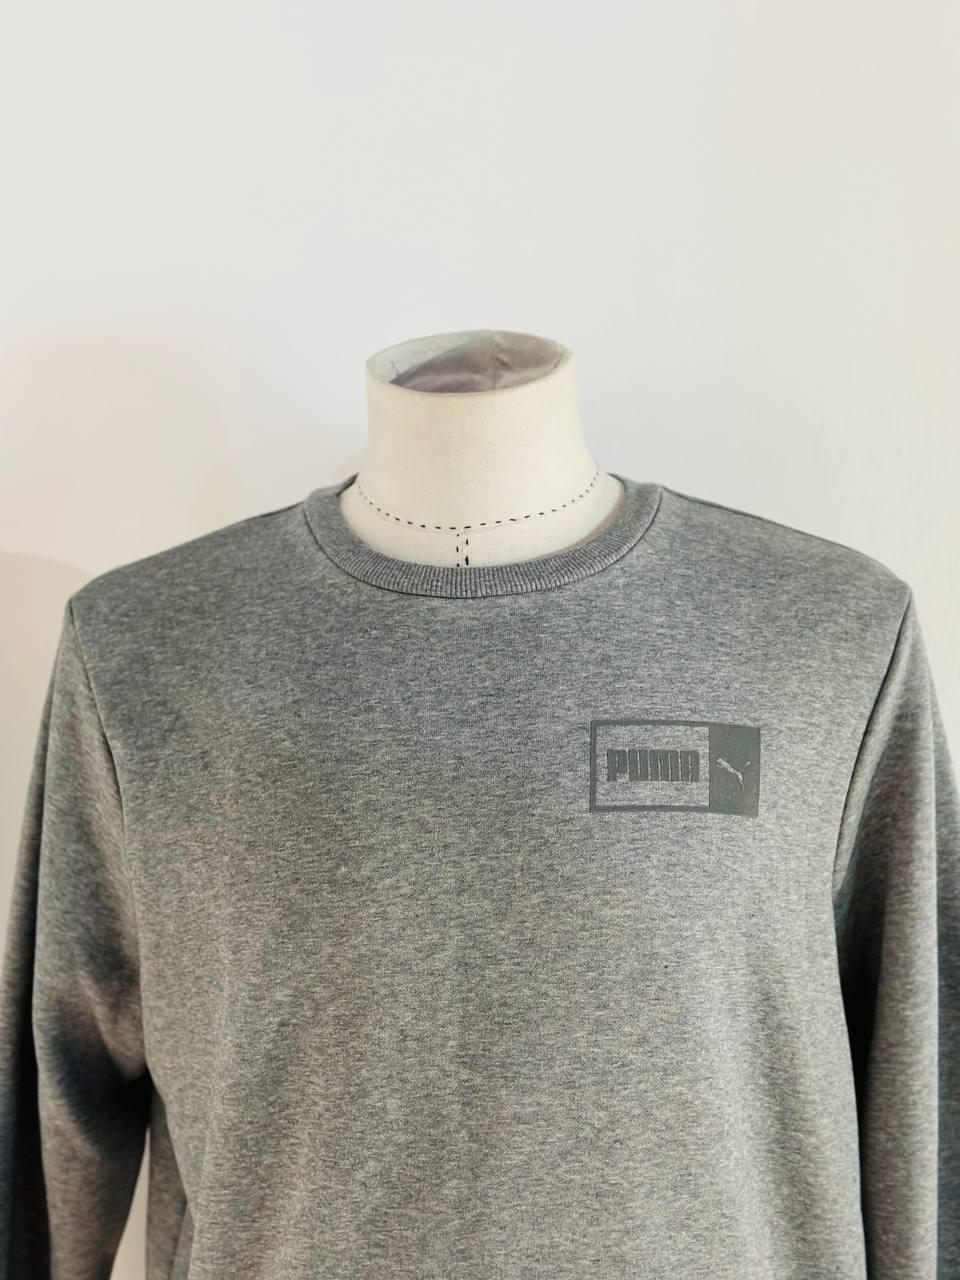 Puma sweater